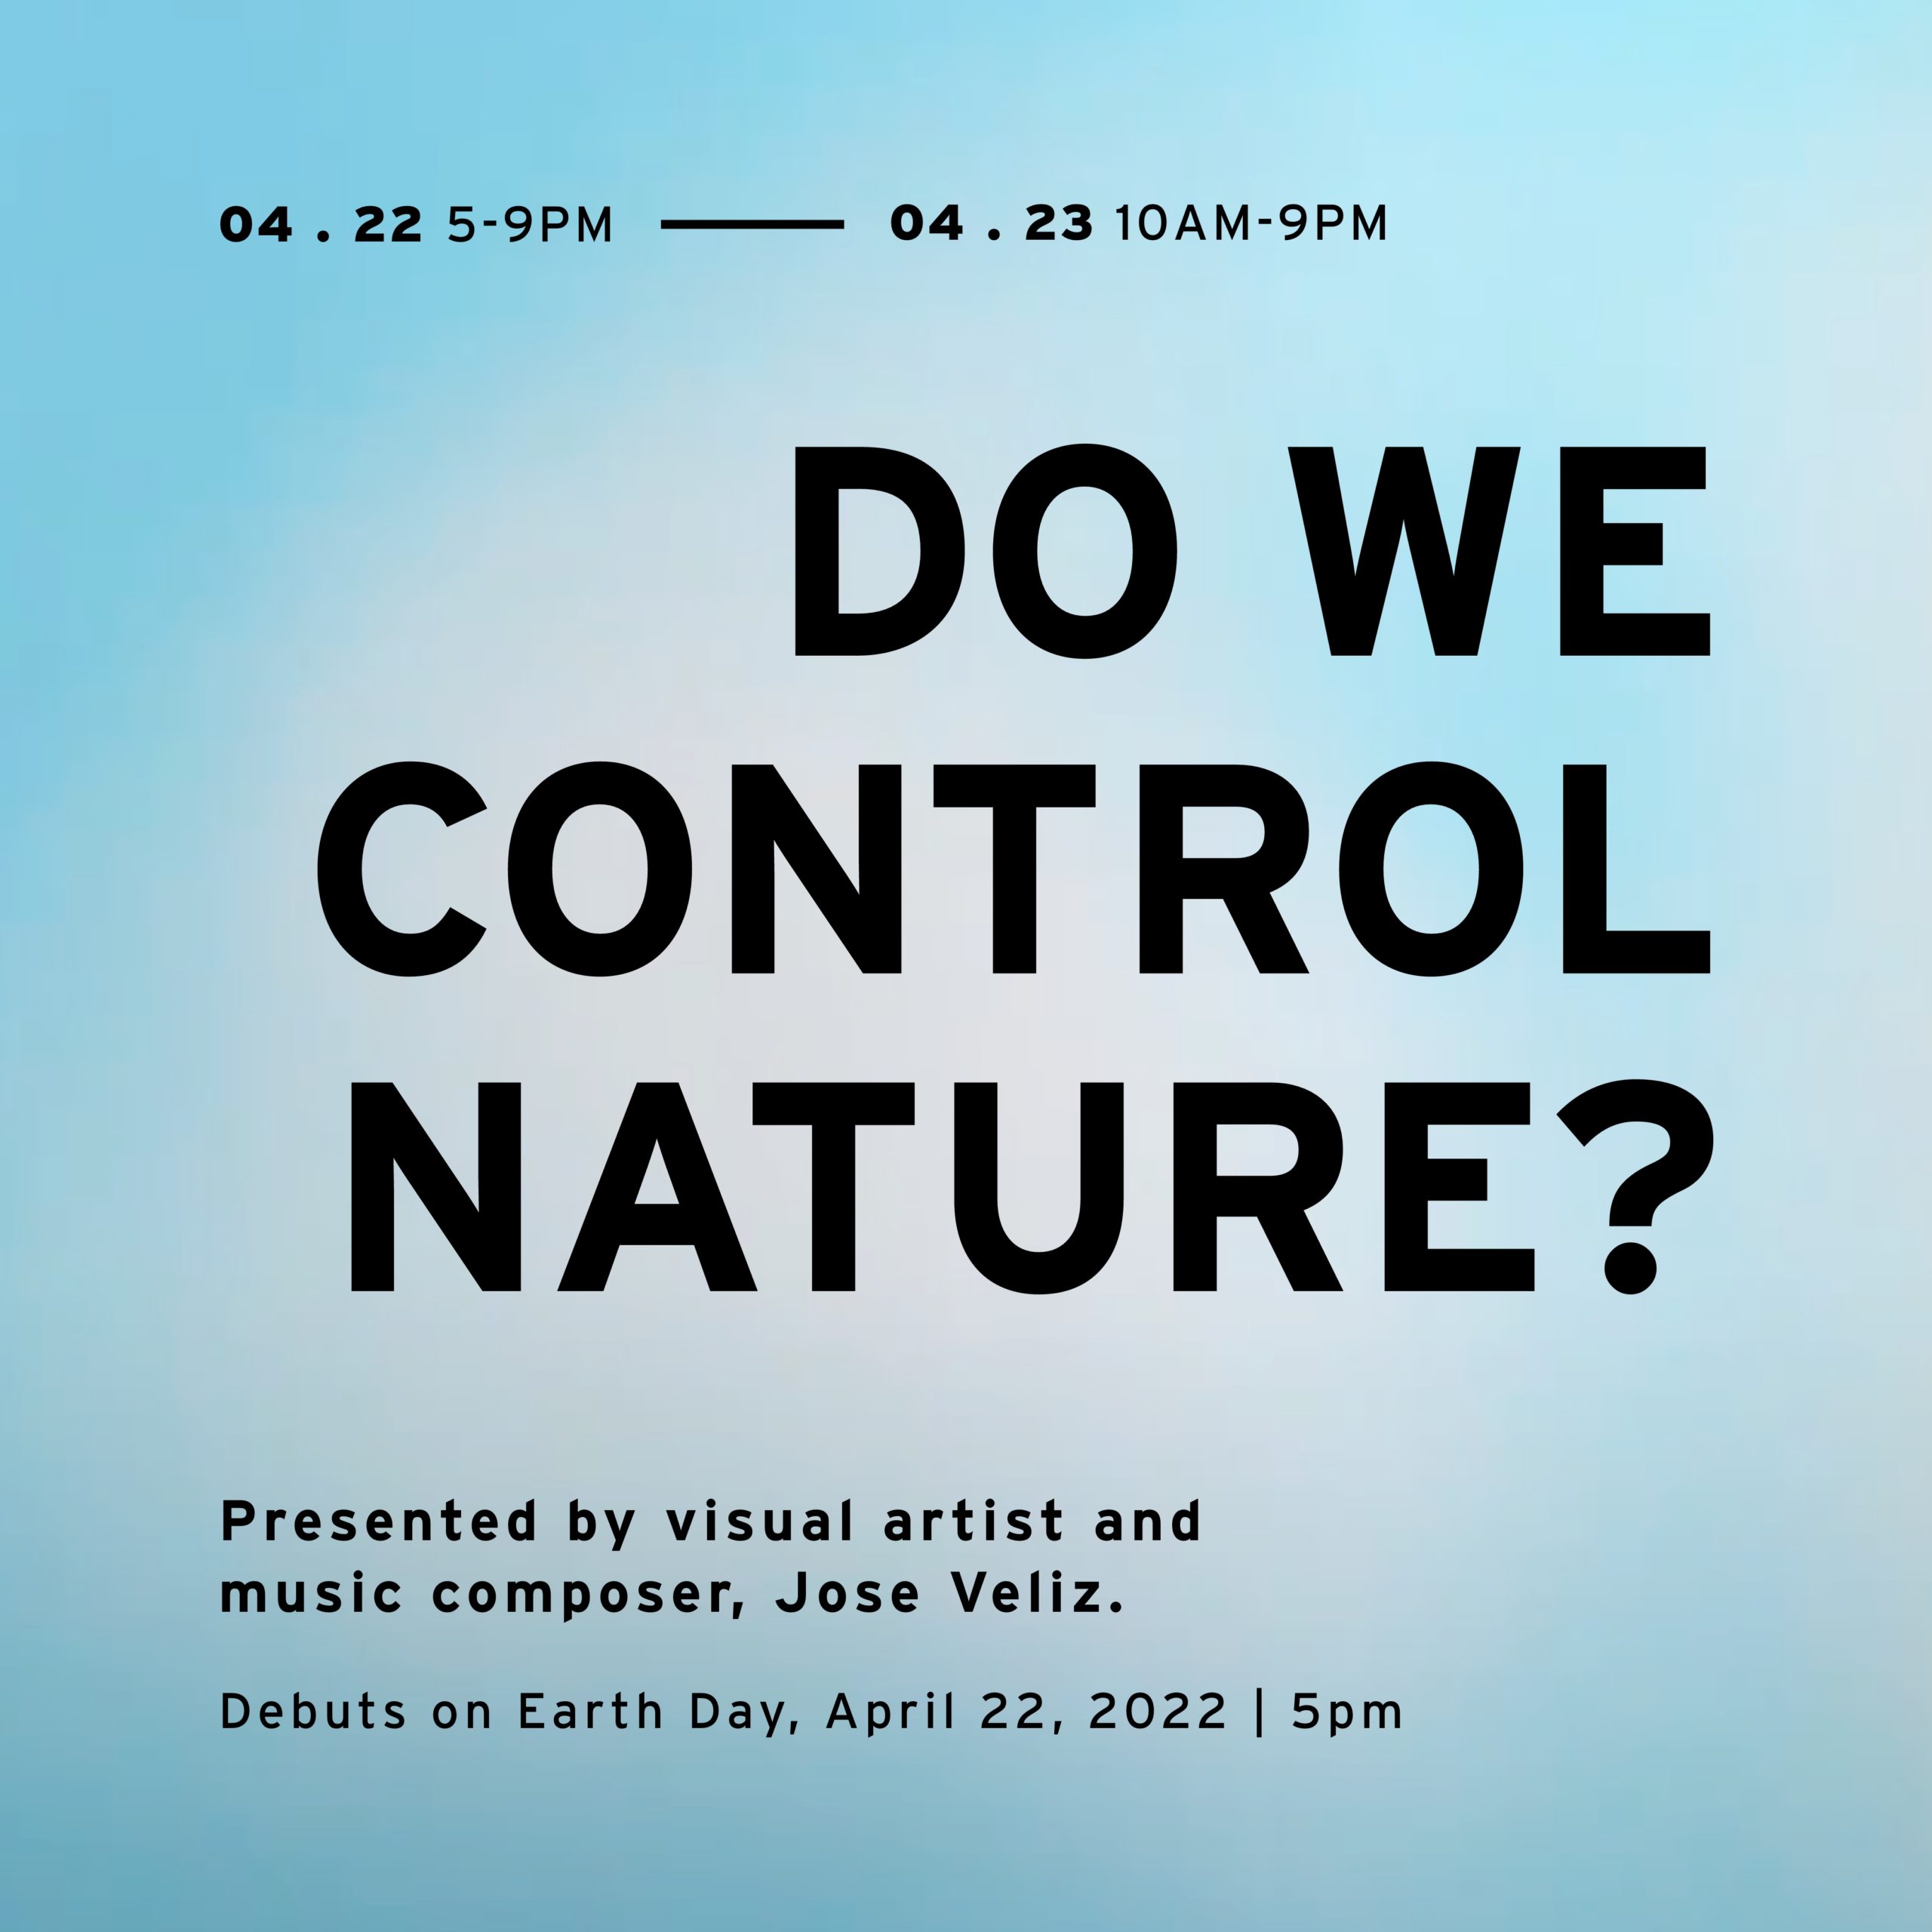 DO WE CONTROL NATURE?